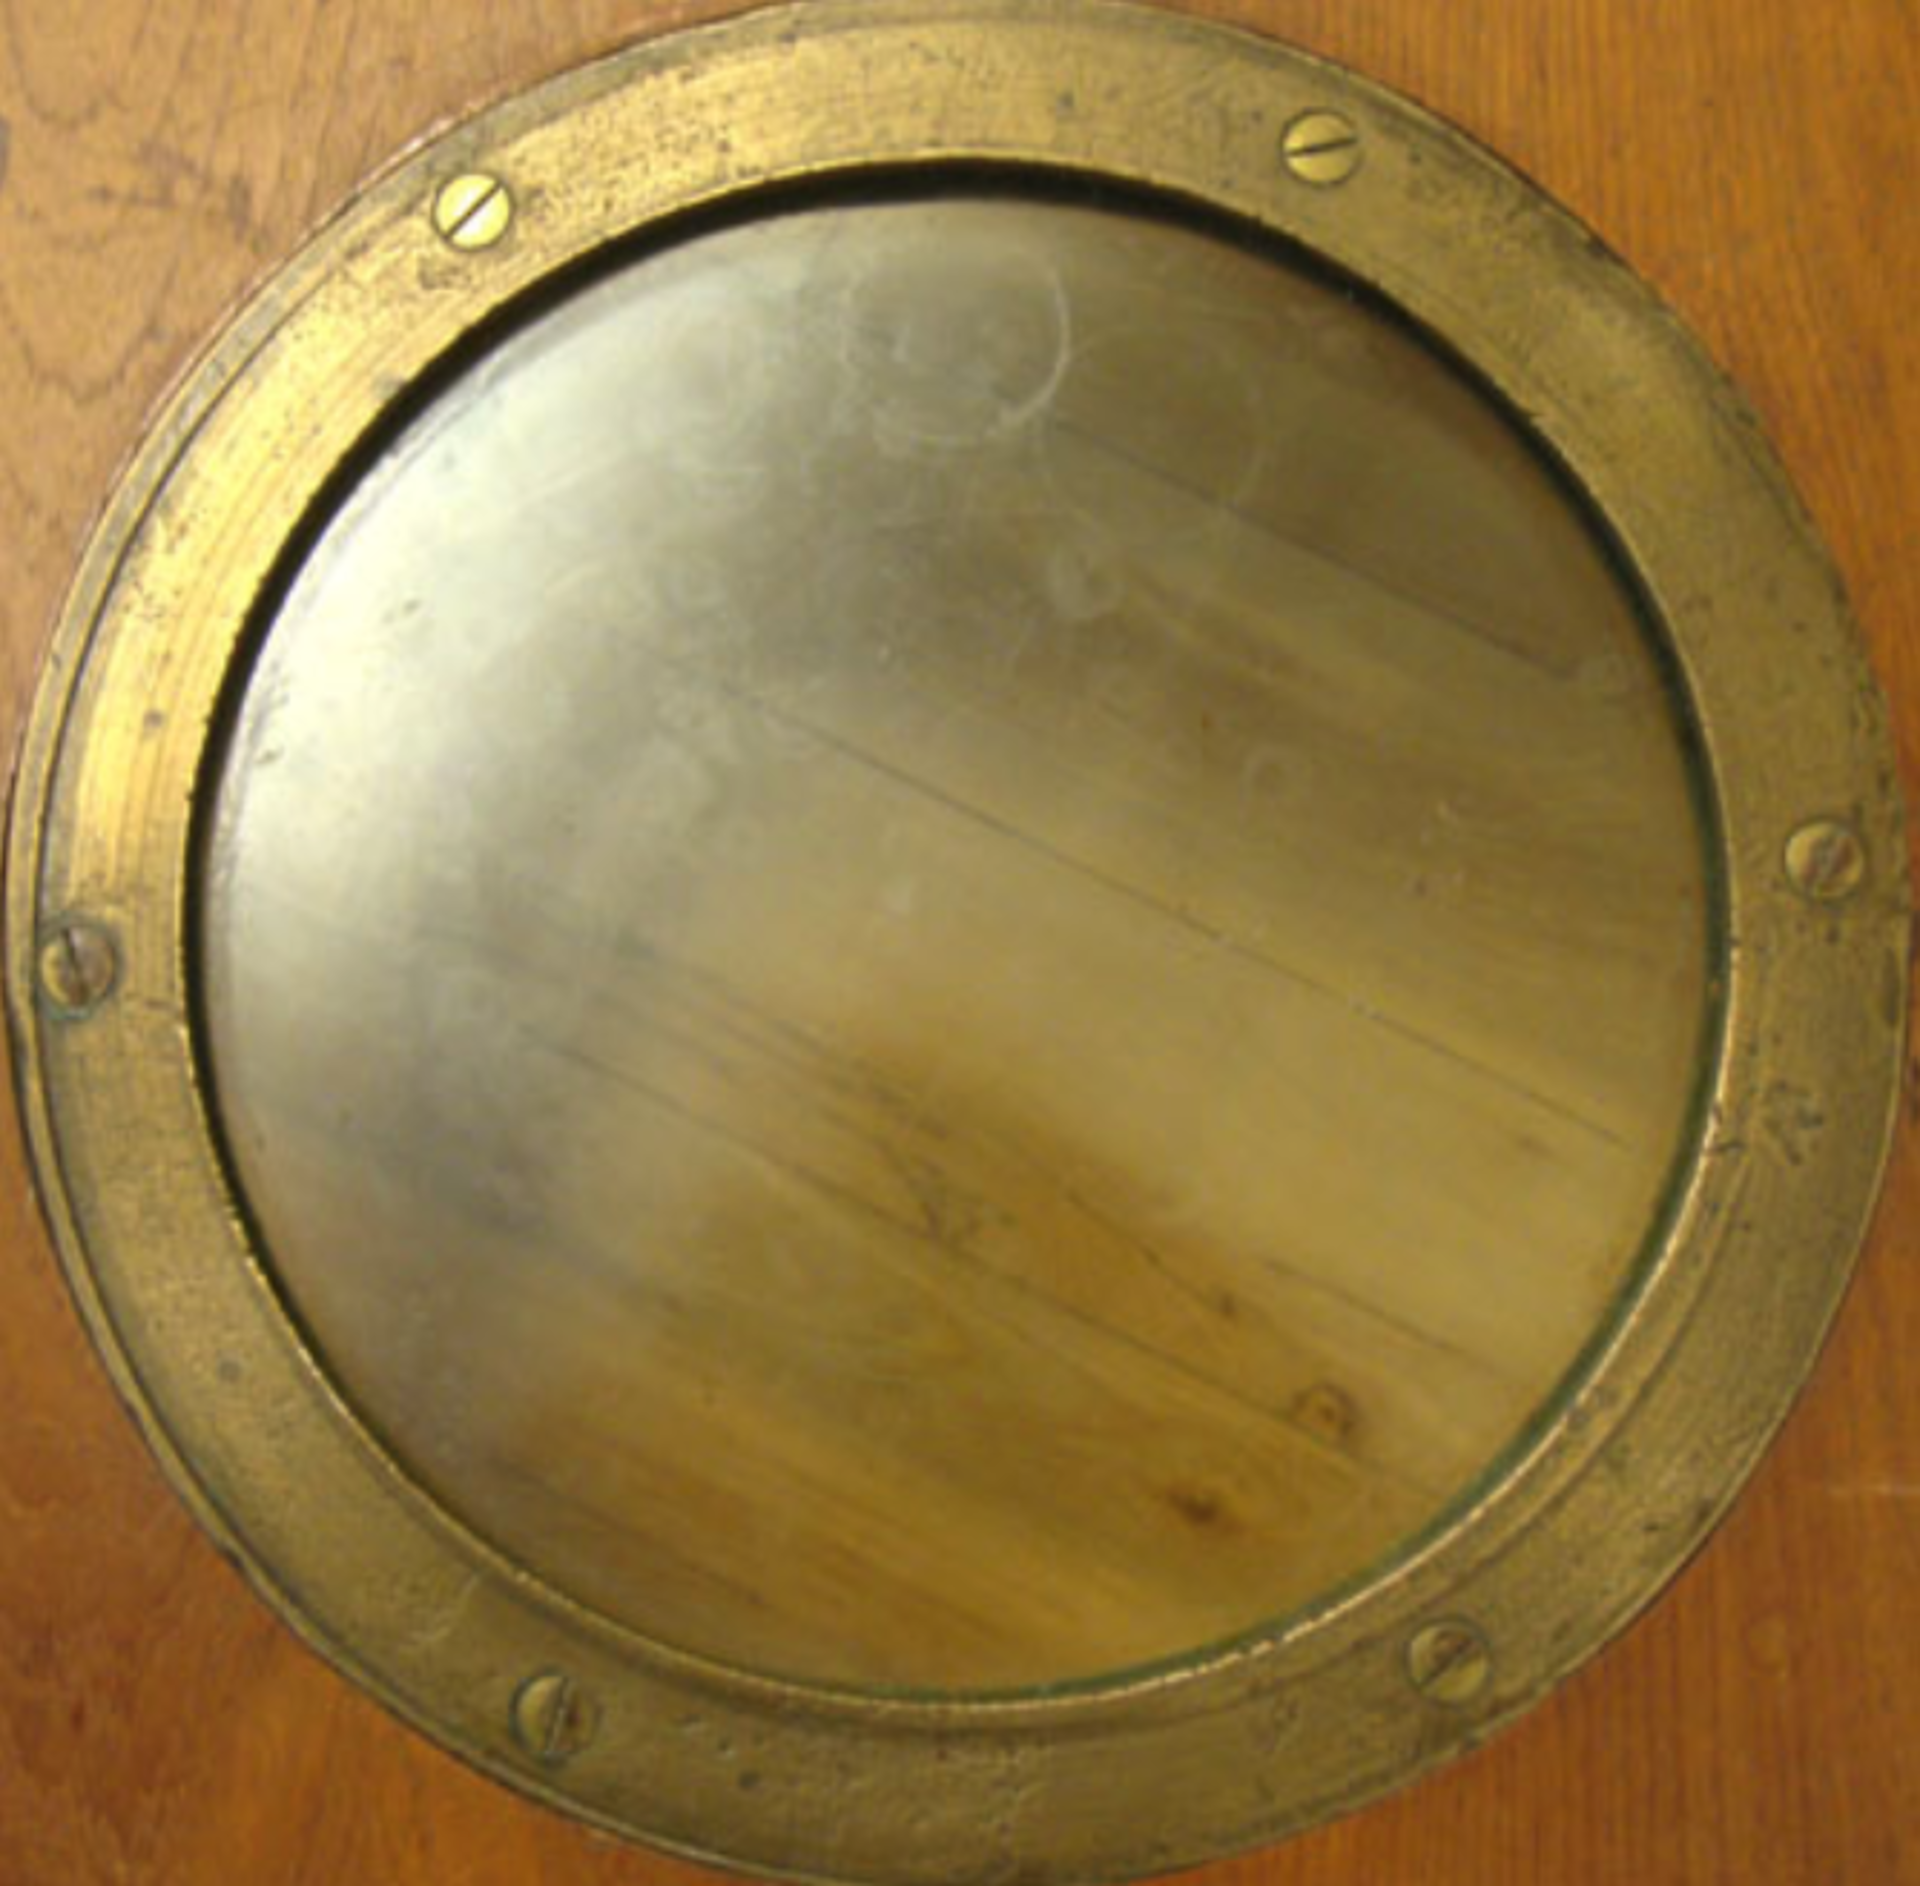 SS Catilian Porthole Rim Recovered From Scapa Flow With Porthole Glass From SMS Kronprinz Wilhelm - Bild 2 aus 3